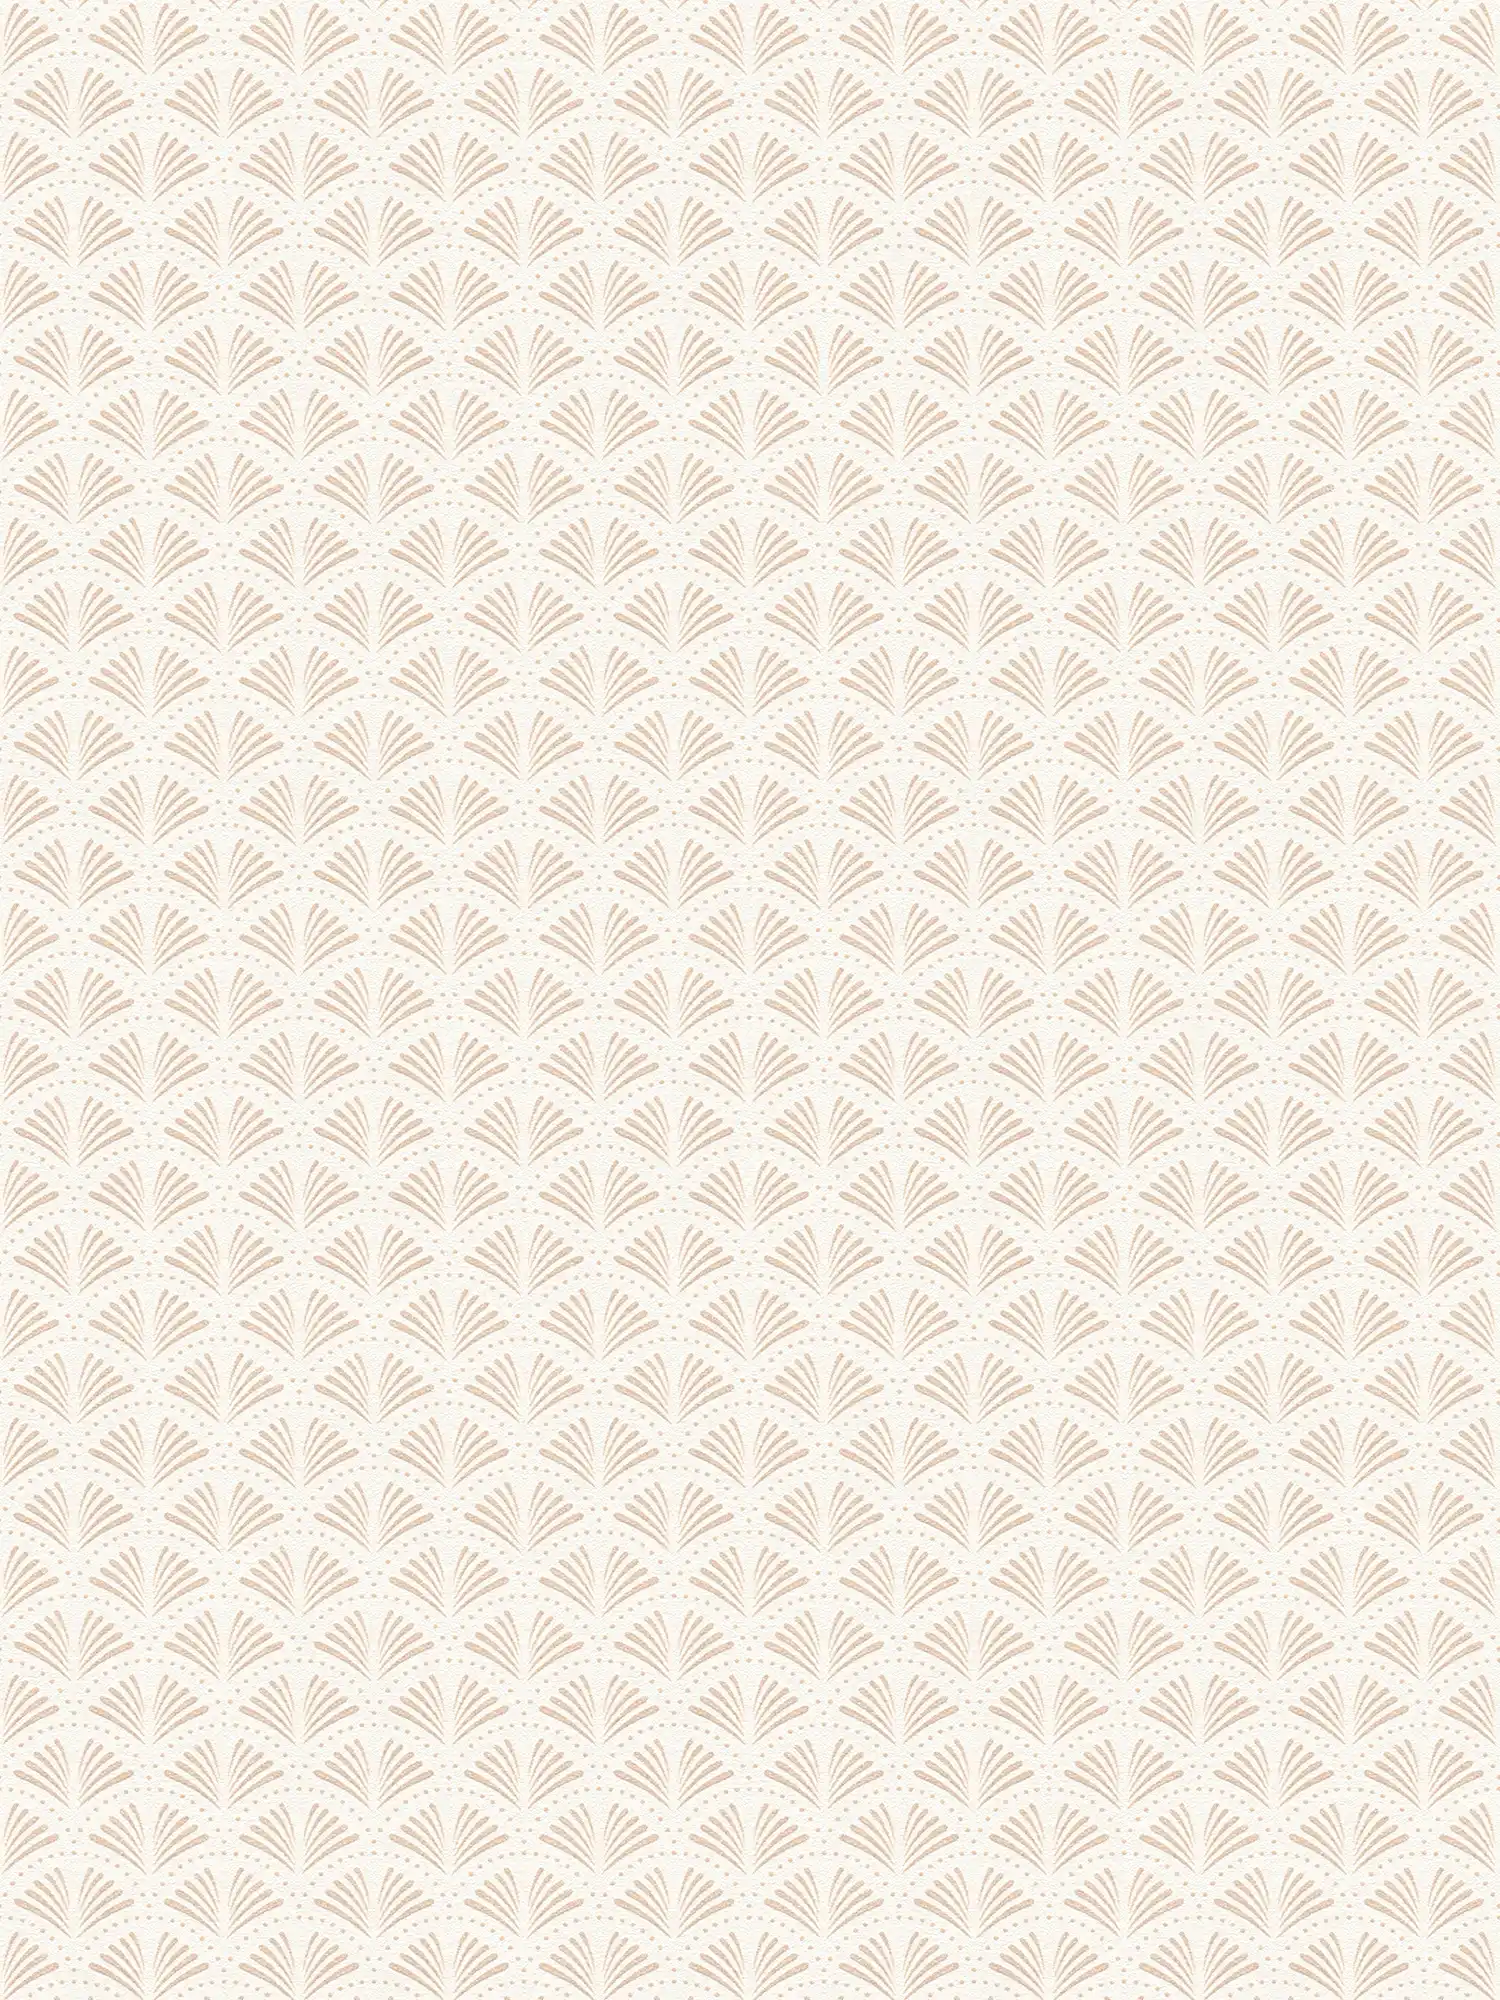 Pattern wallpaper gold & white with fan pattern & dots
